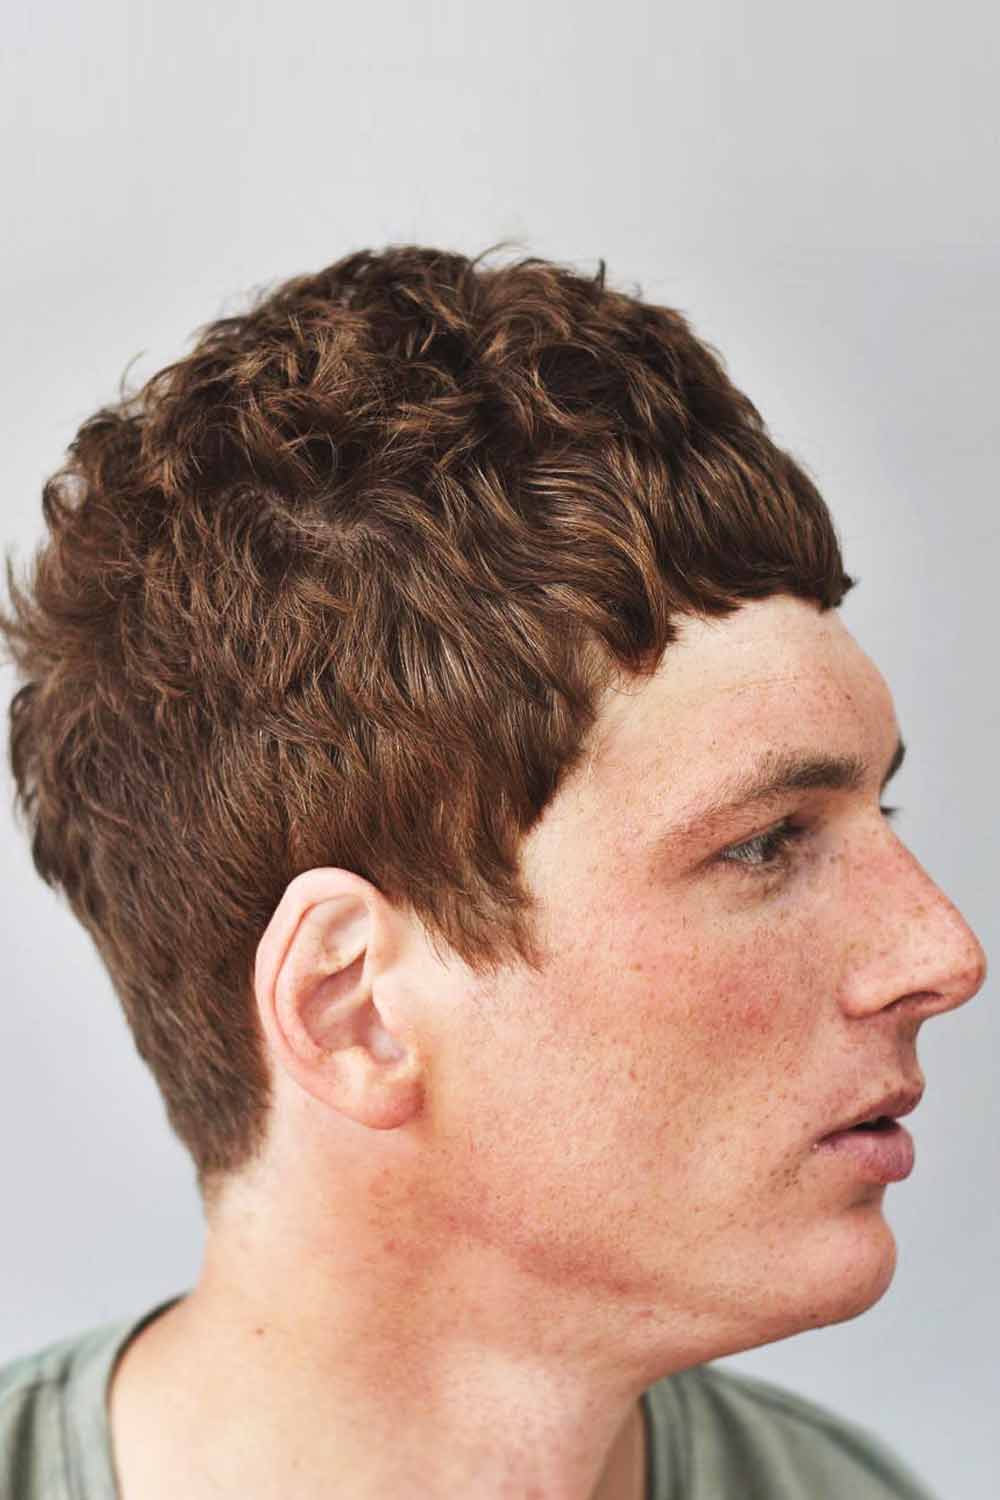 What Is A Caesar Haircut For Men? #caesarhaircut #caesarhairstyle #caesarcut